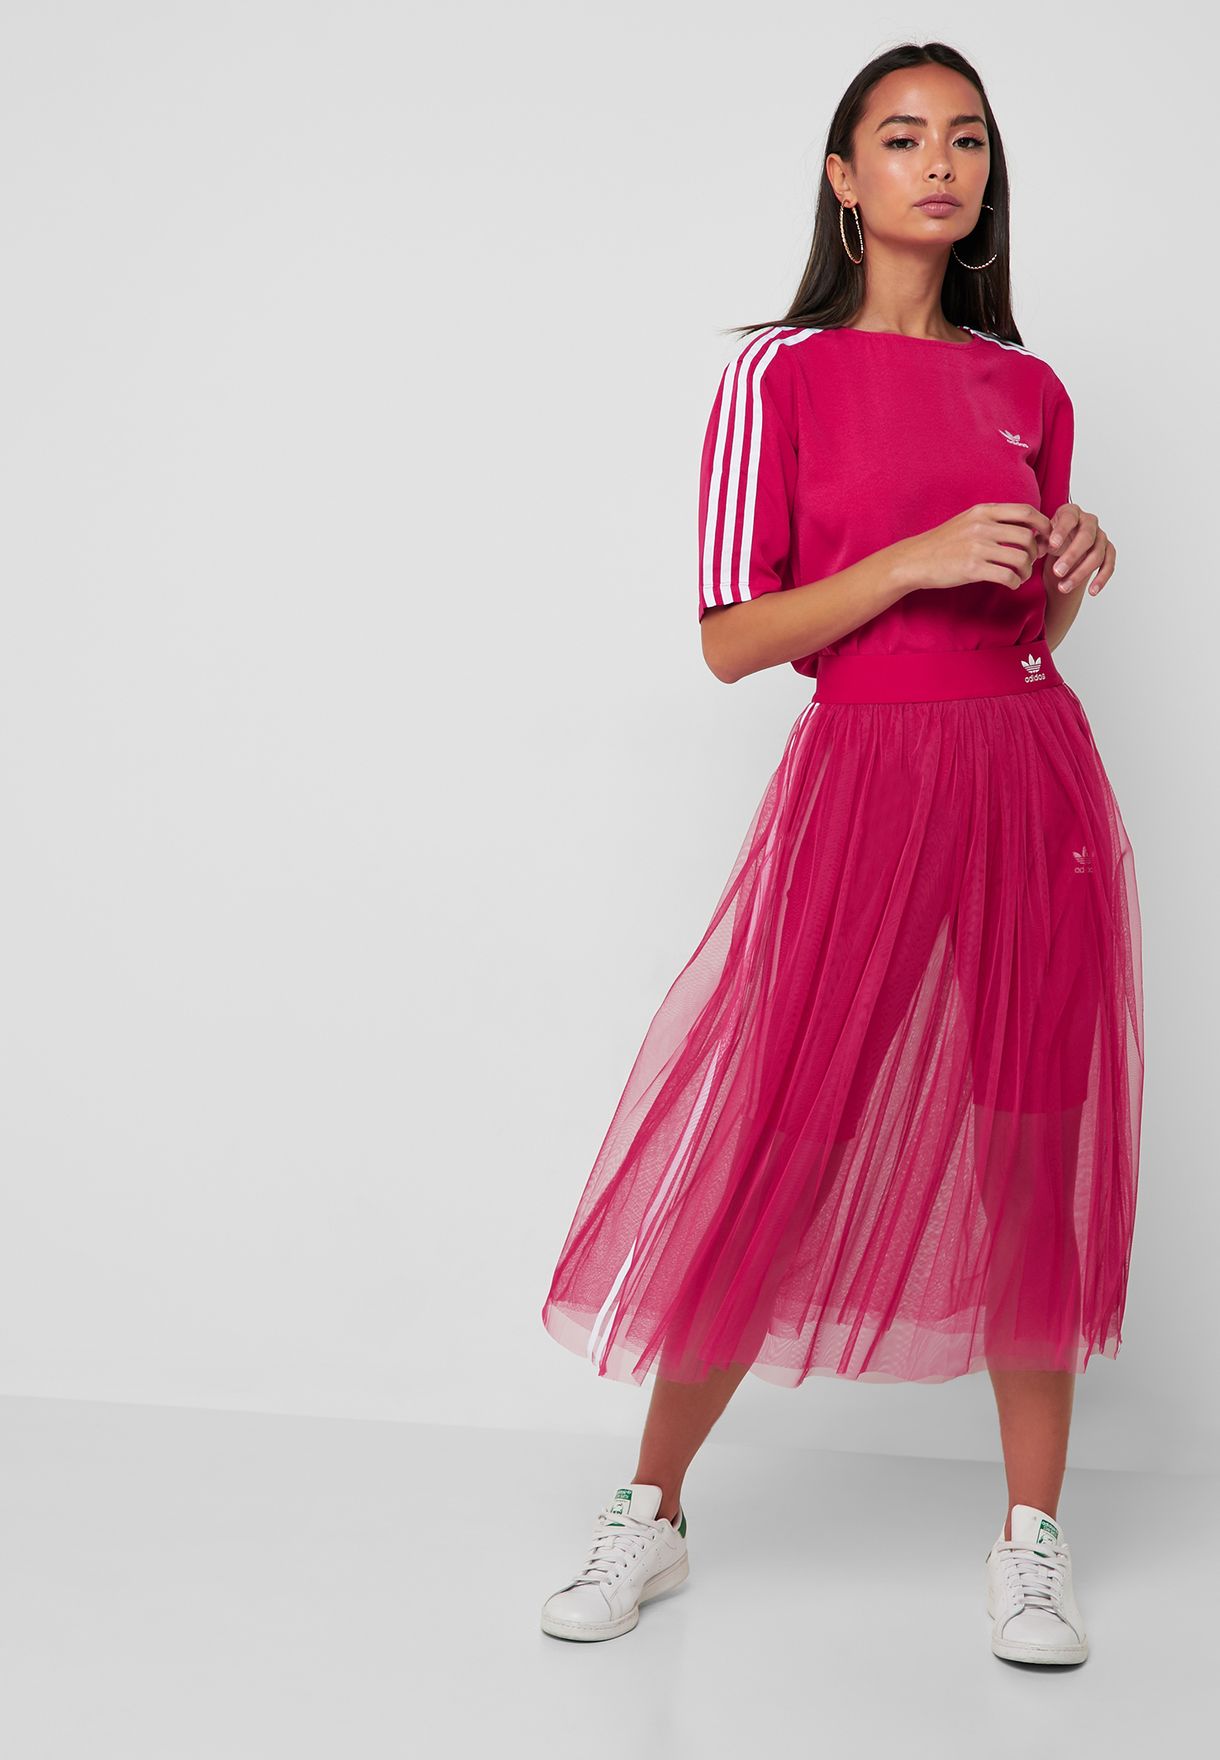 Buy adidas Originals Tulle Skirt for Manama, Riffa